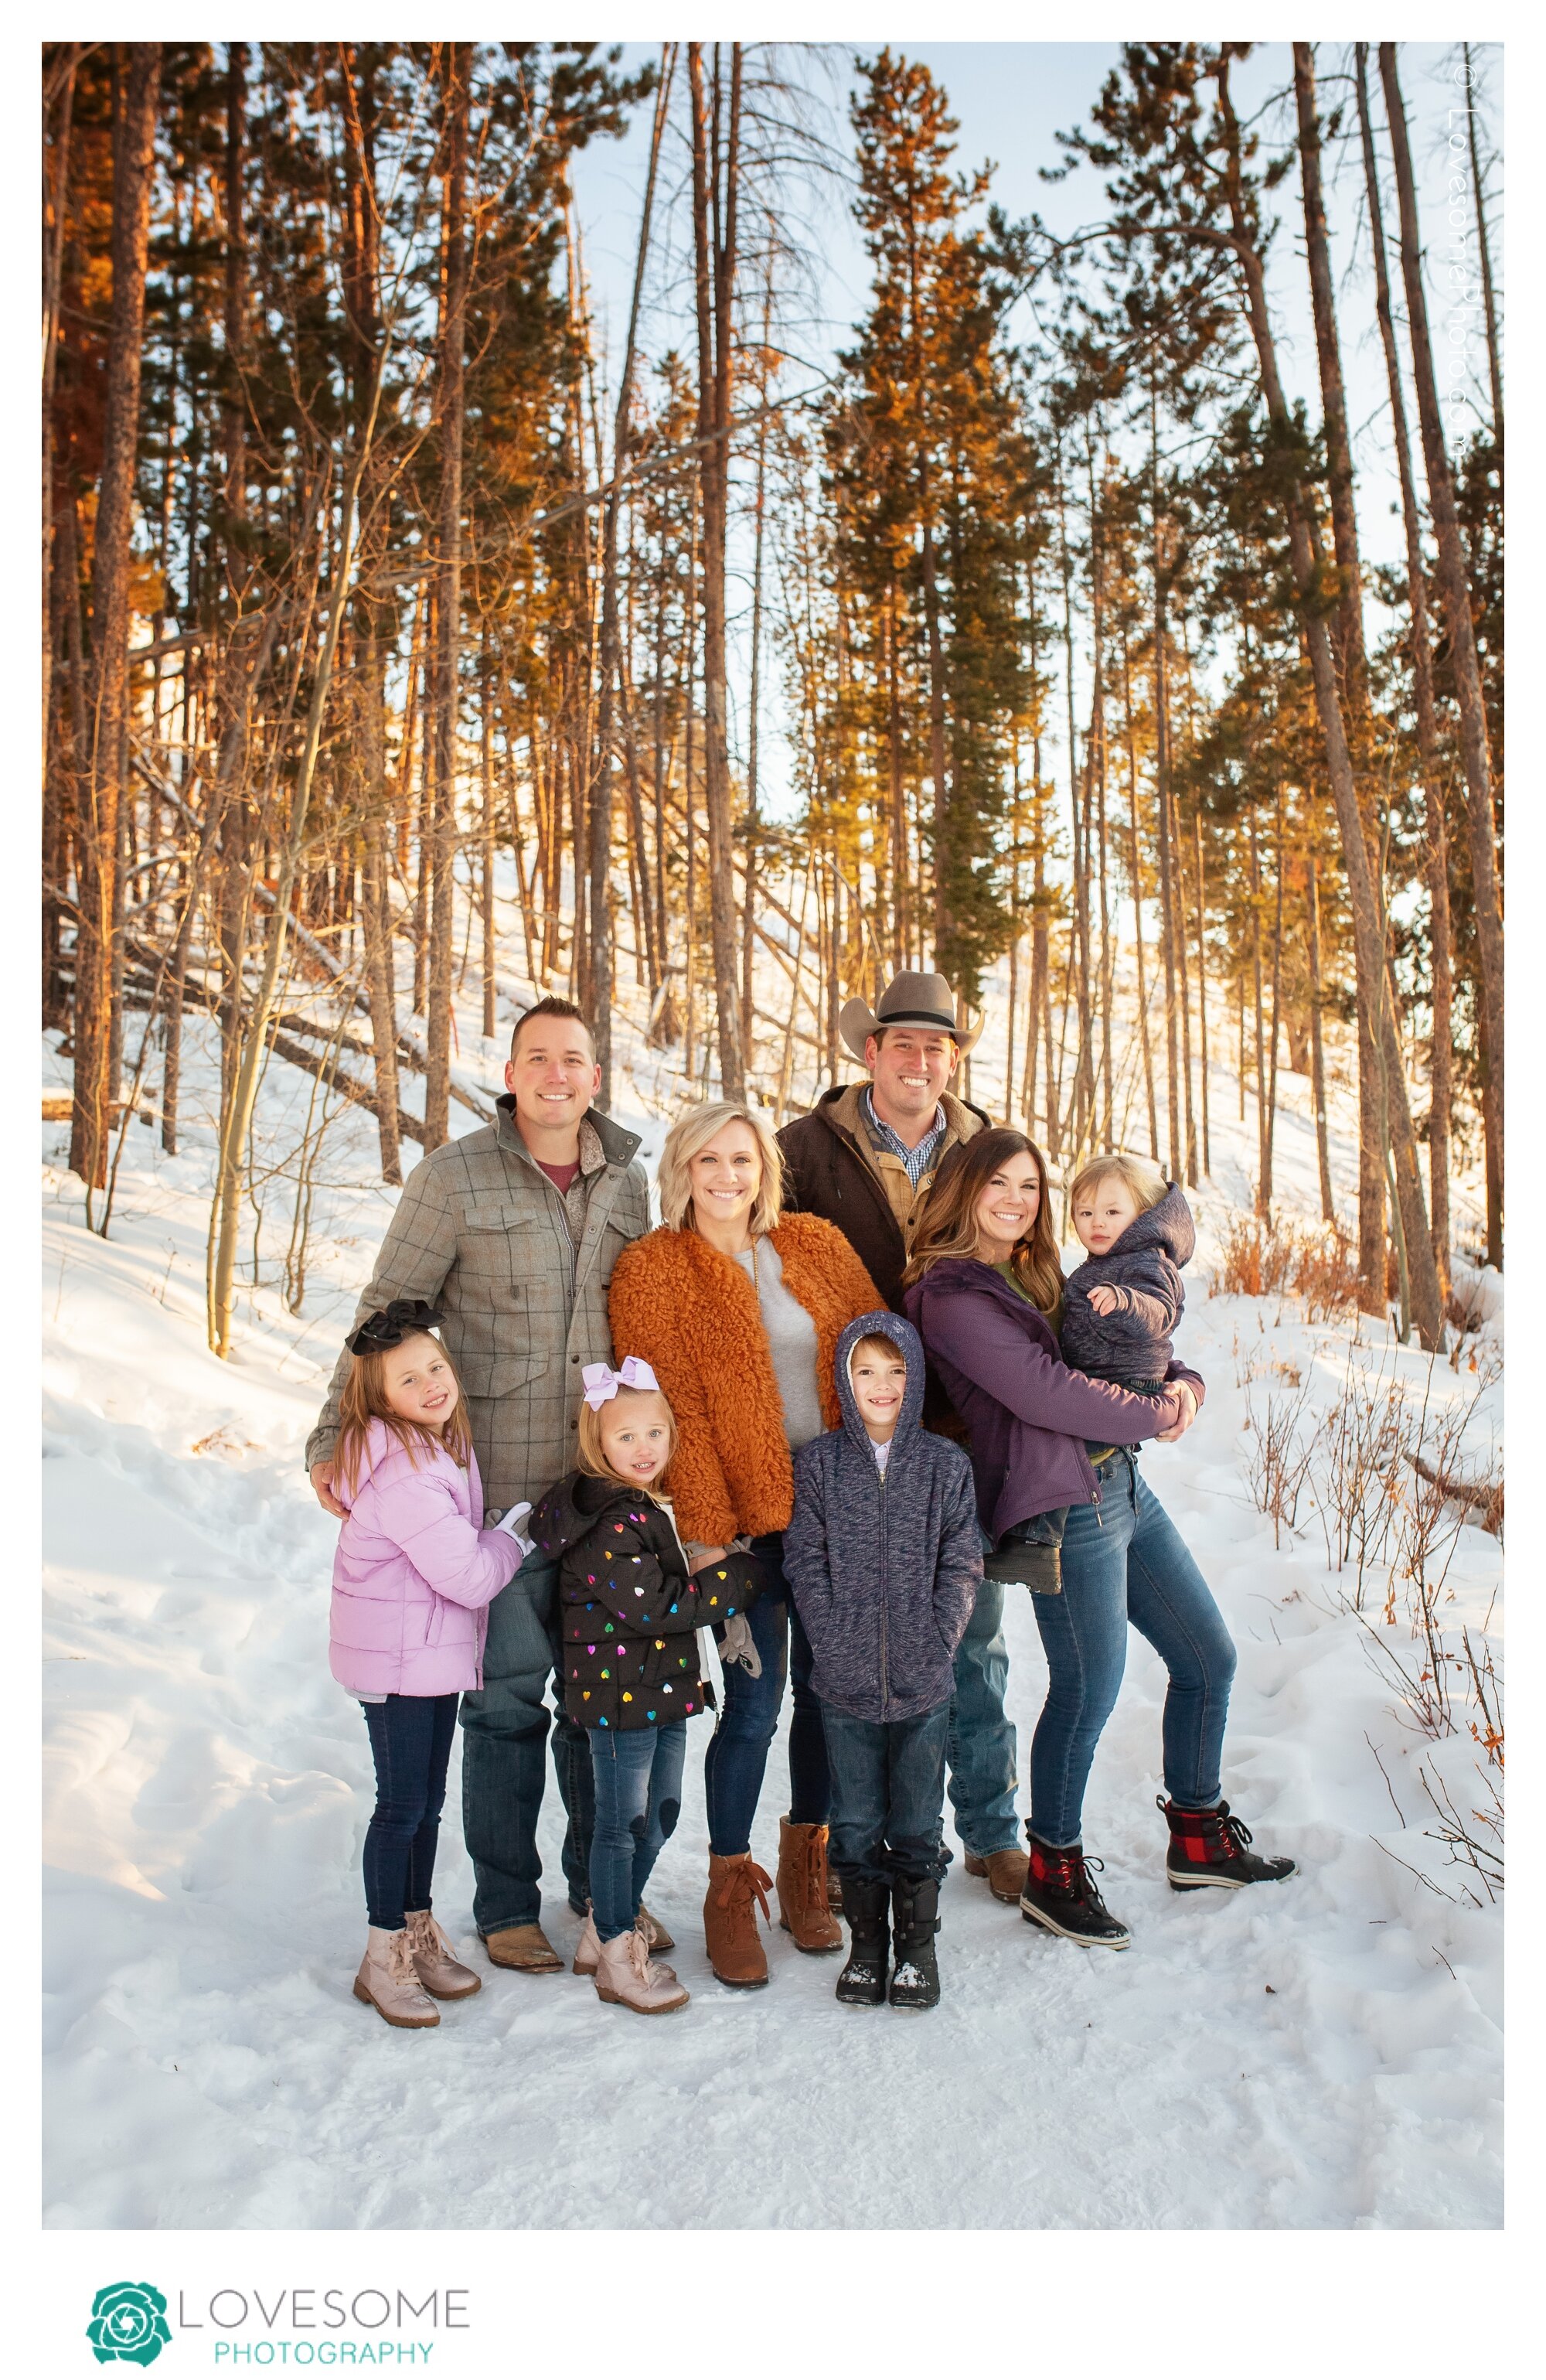 large family photo ideas winter